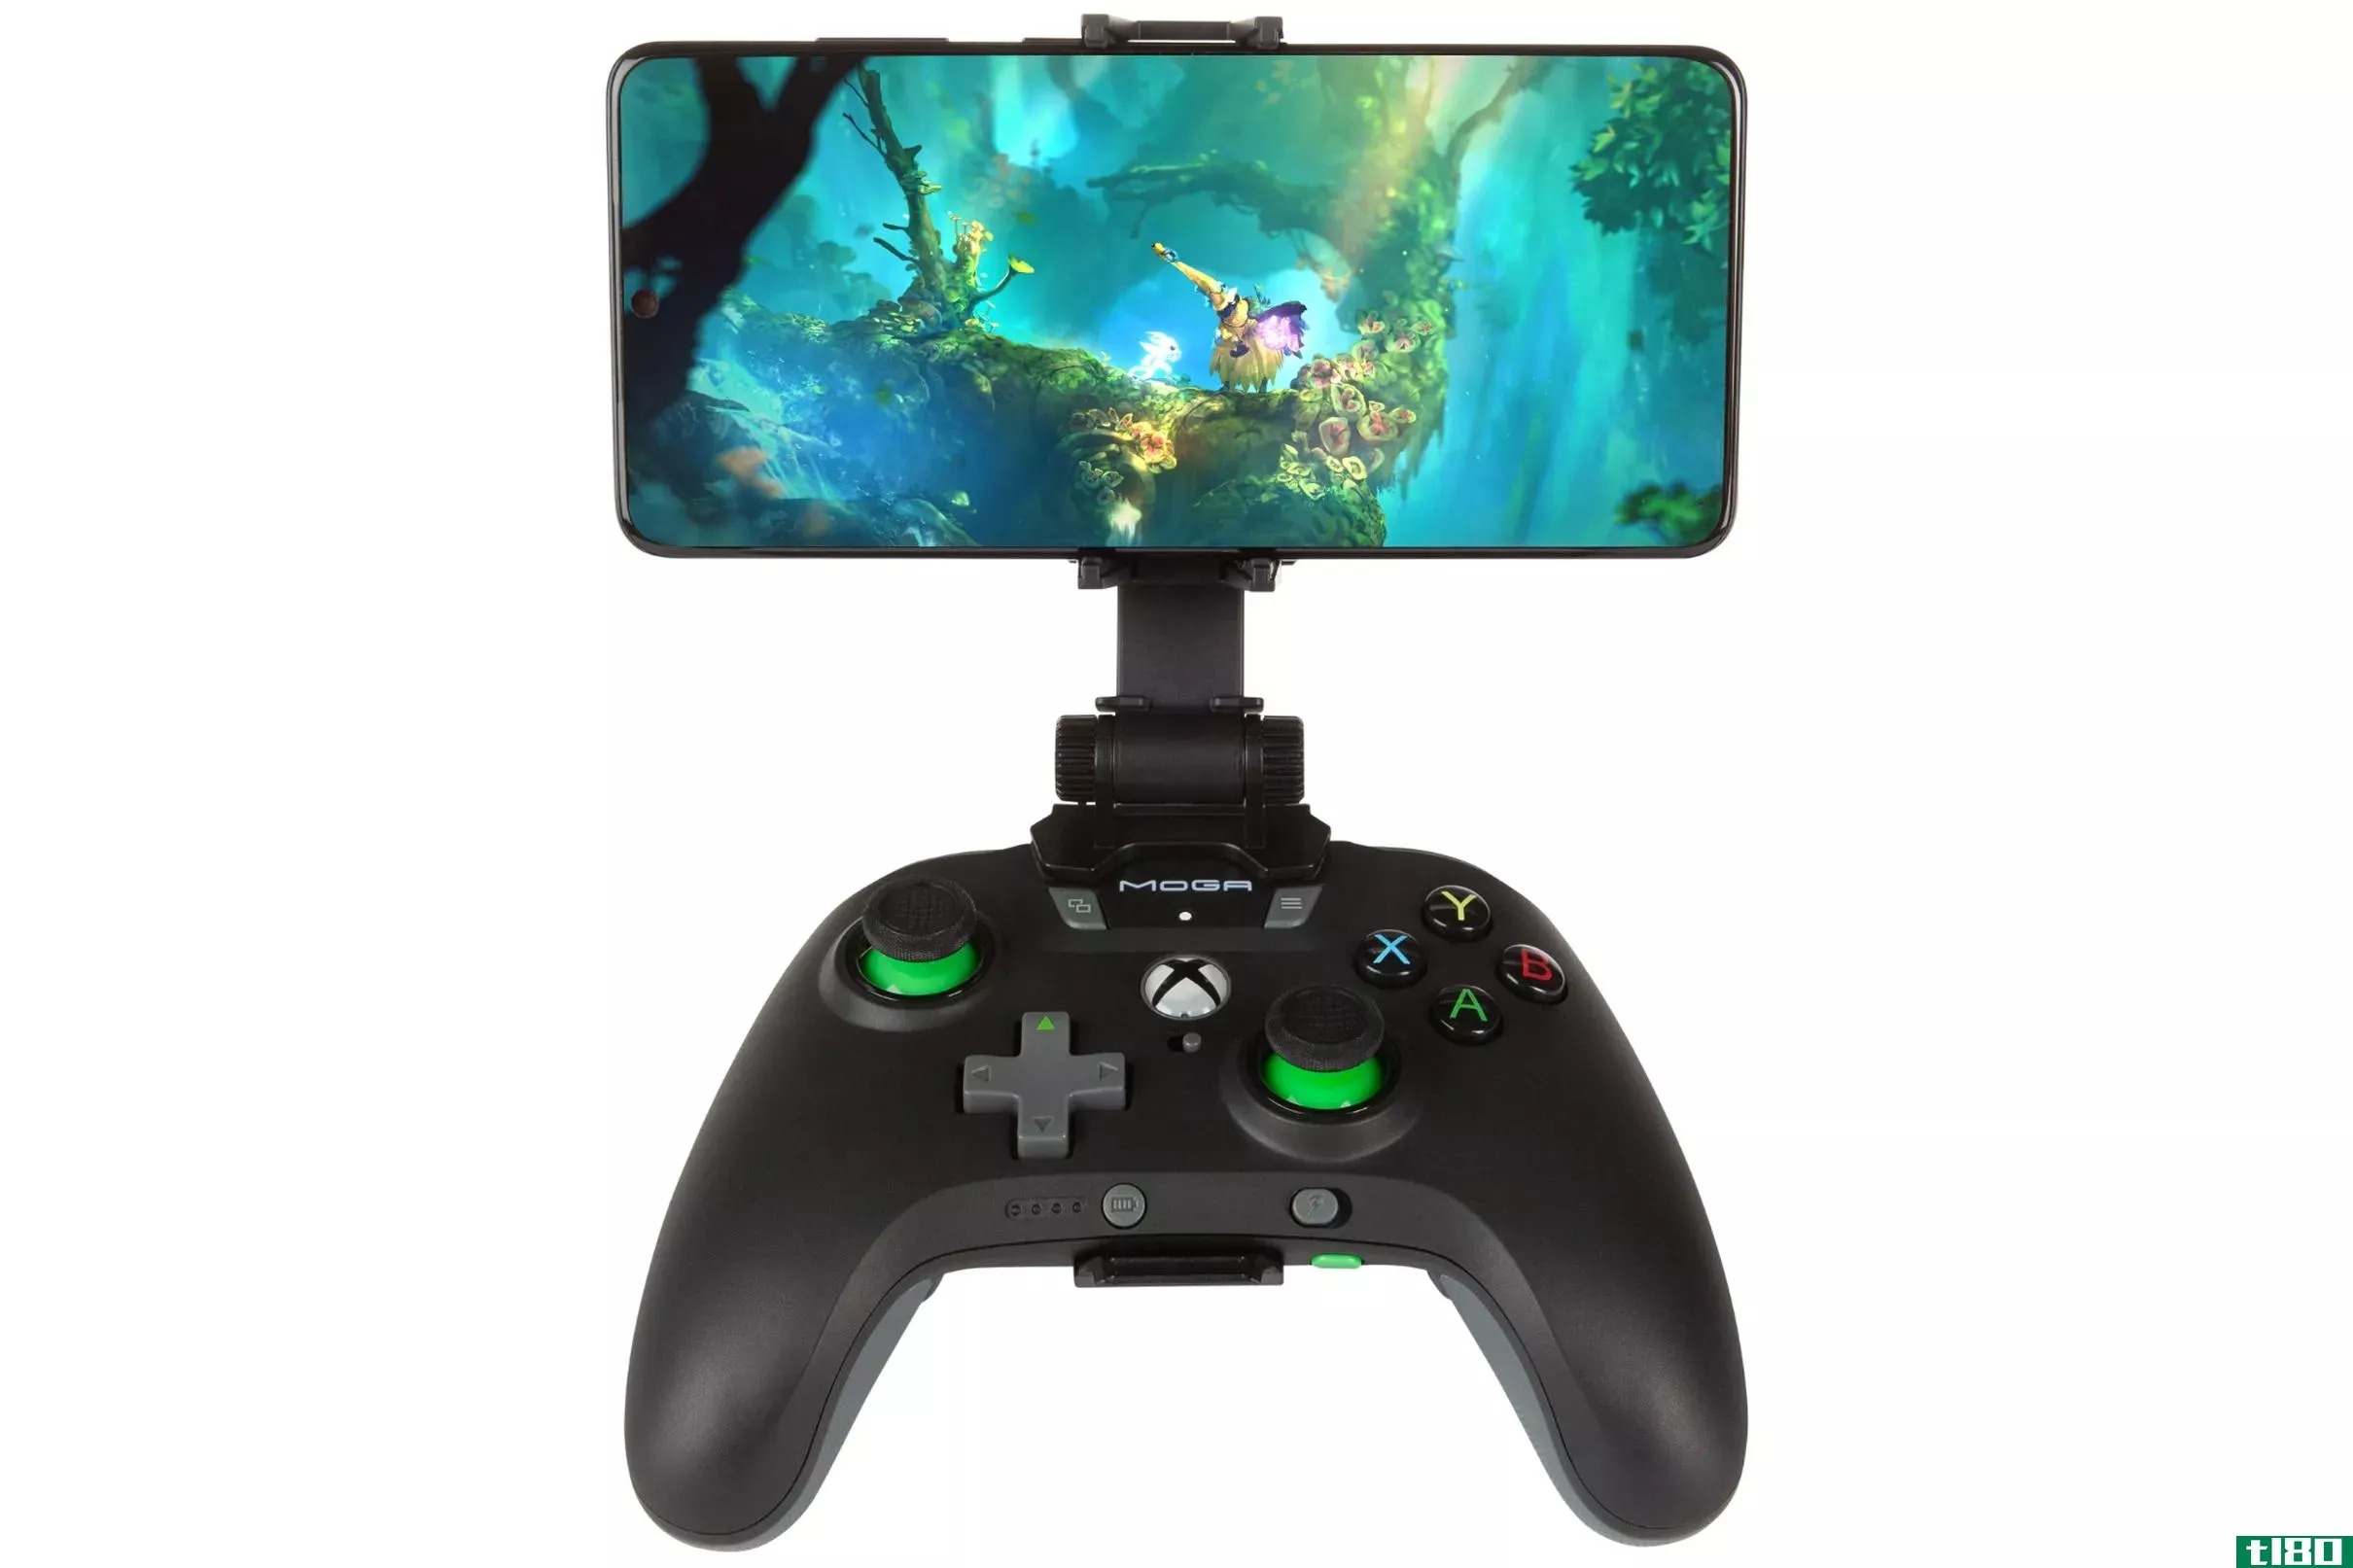 powera的xcloud ready控制器可以让您的手机在玩游戏时保持充电状态